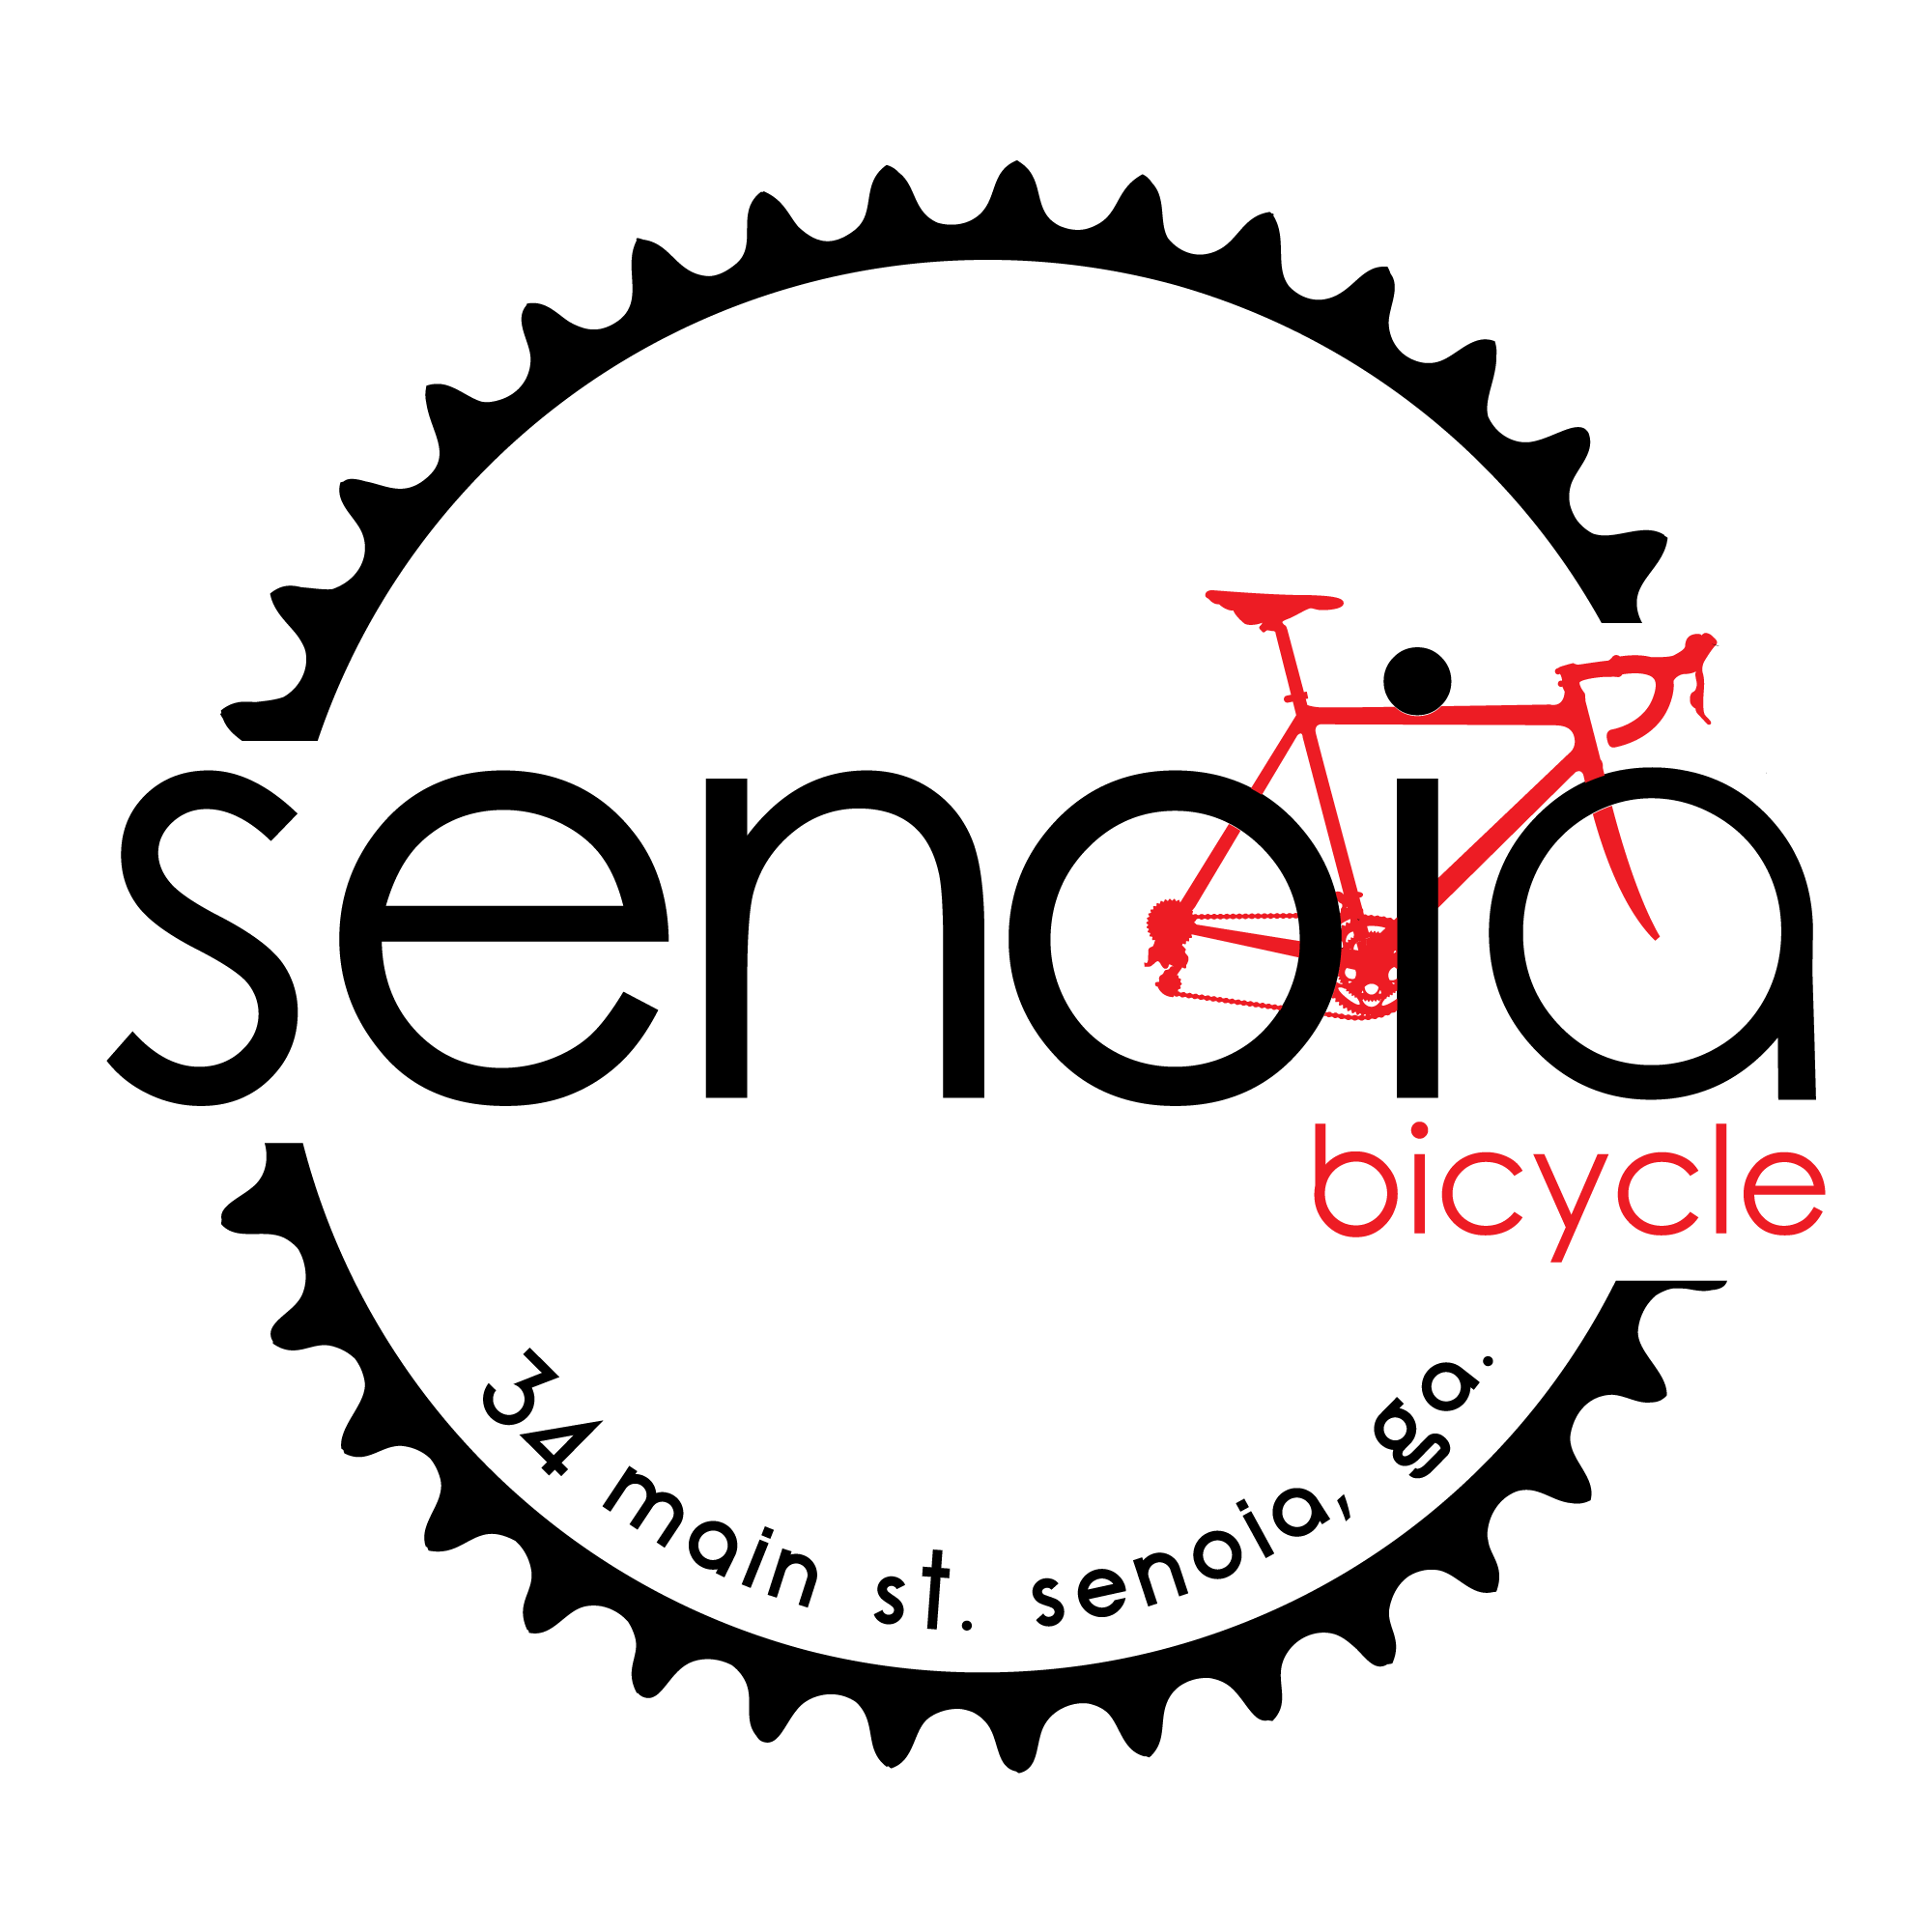 Sponsor Senoia Bicycle